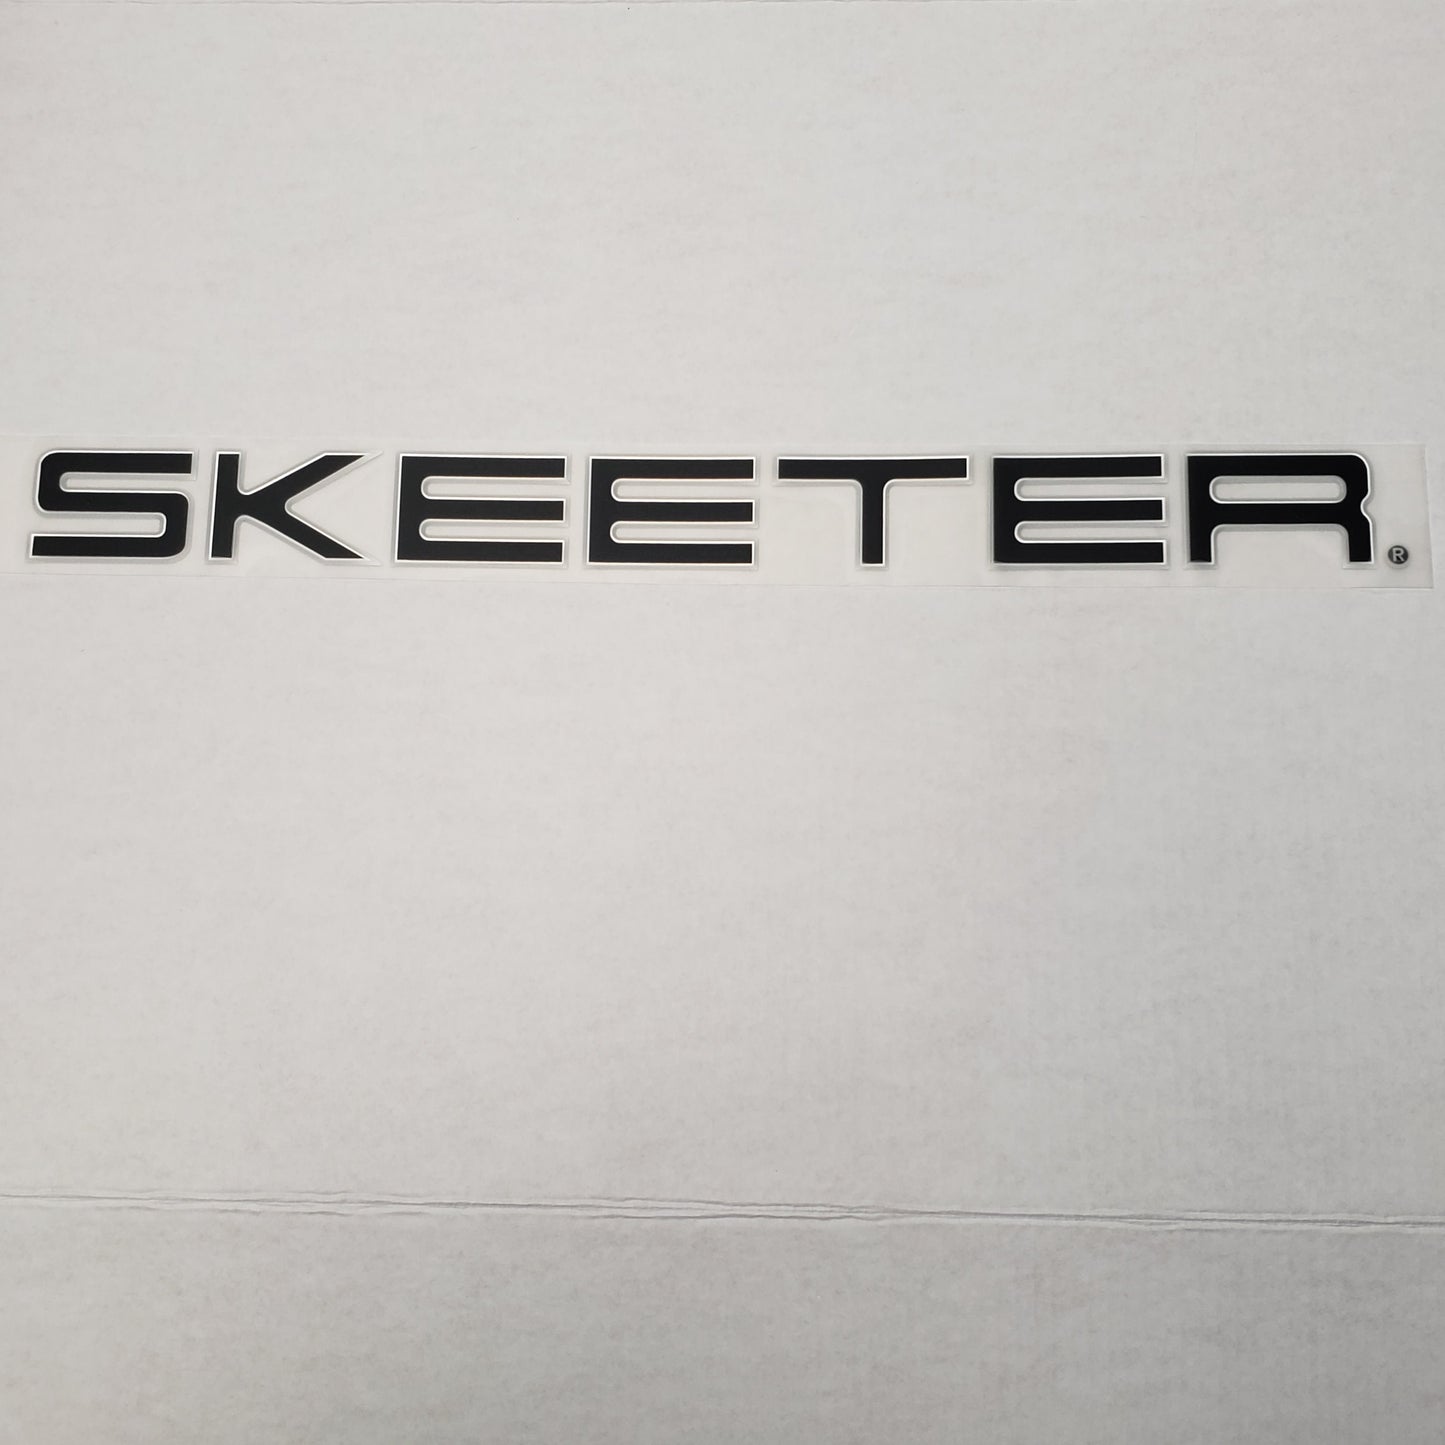 New Authentic Skeeter Emblem Black 32"